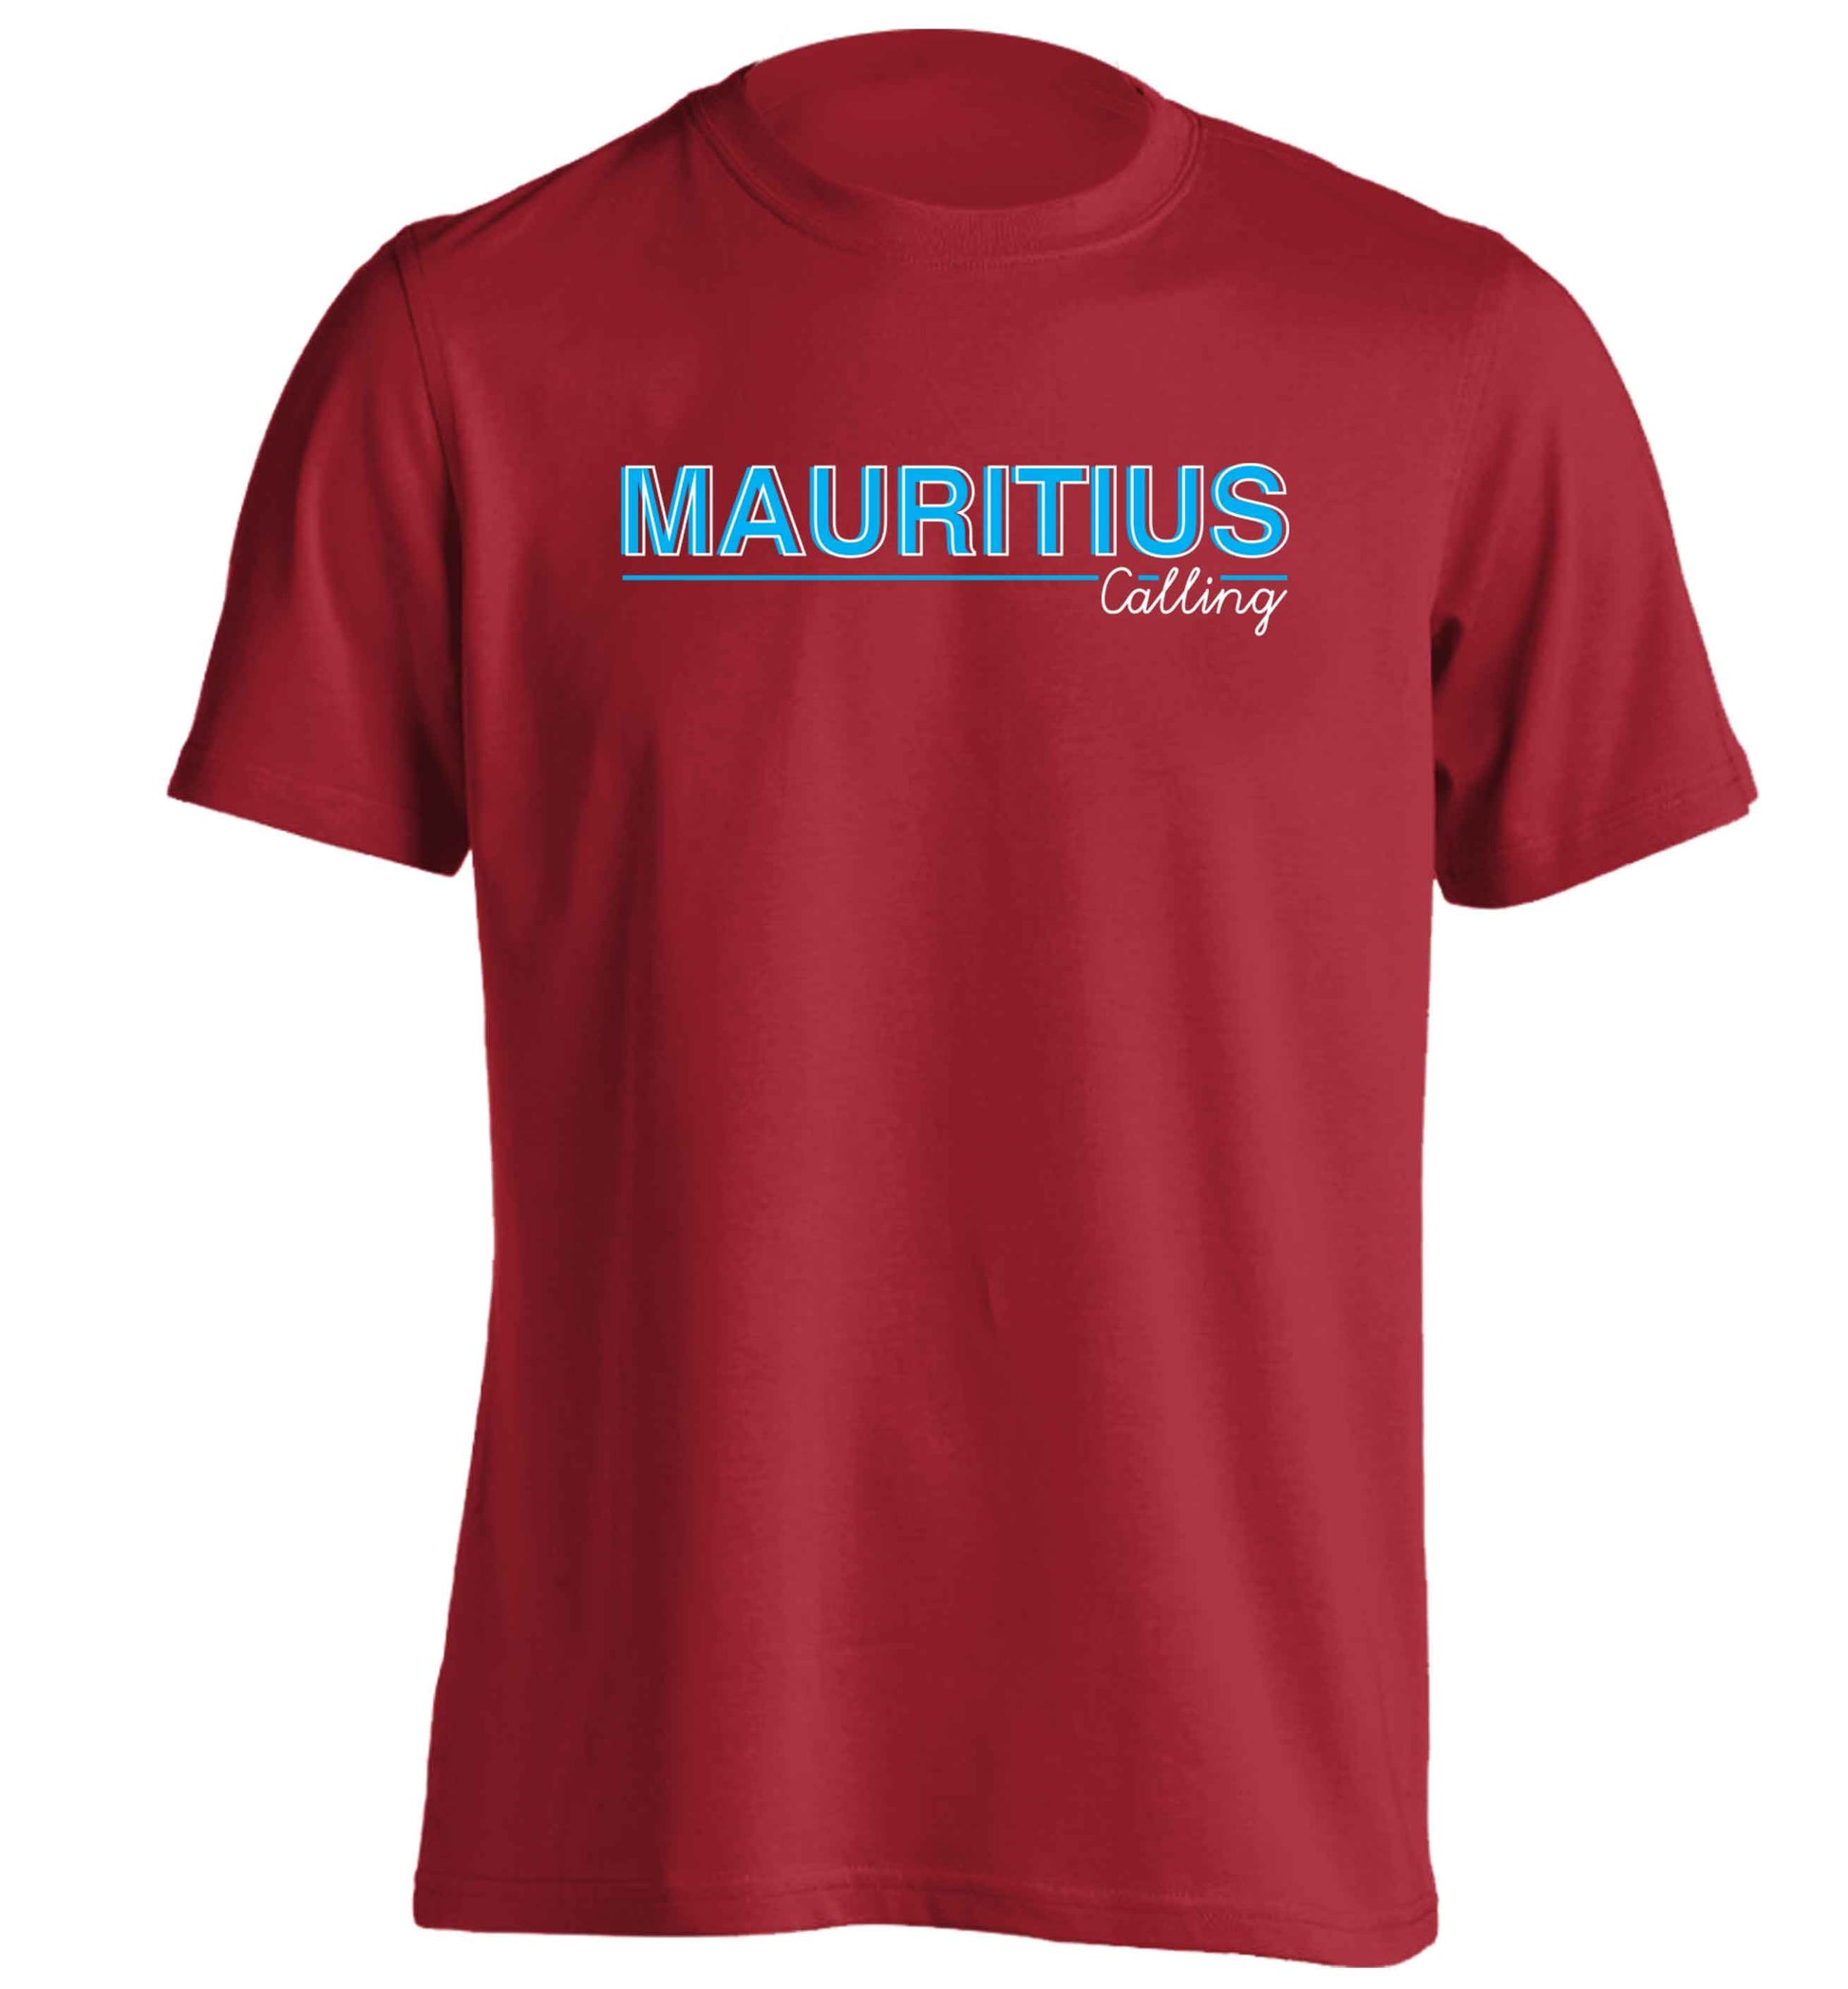 Mauritius calling adults unisex red Tshirt 2XL